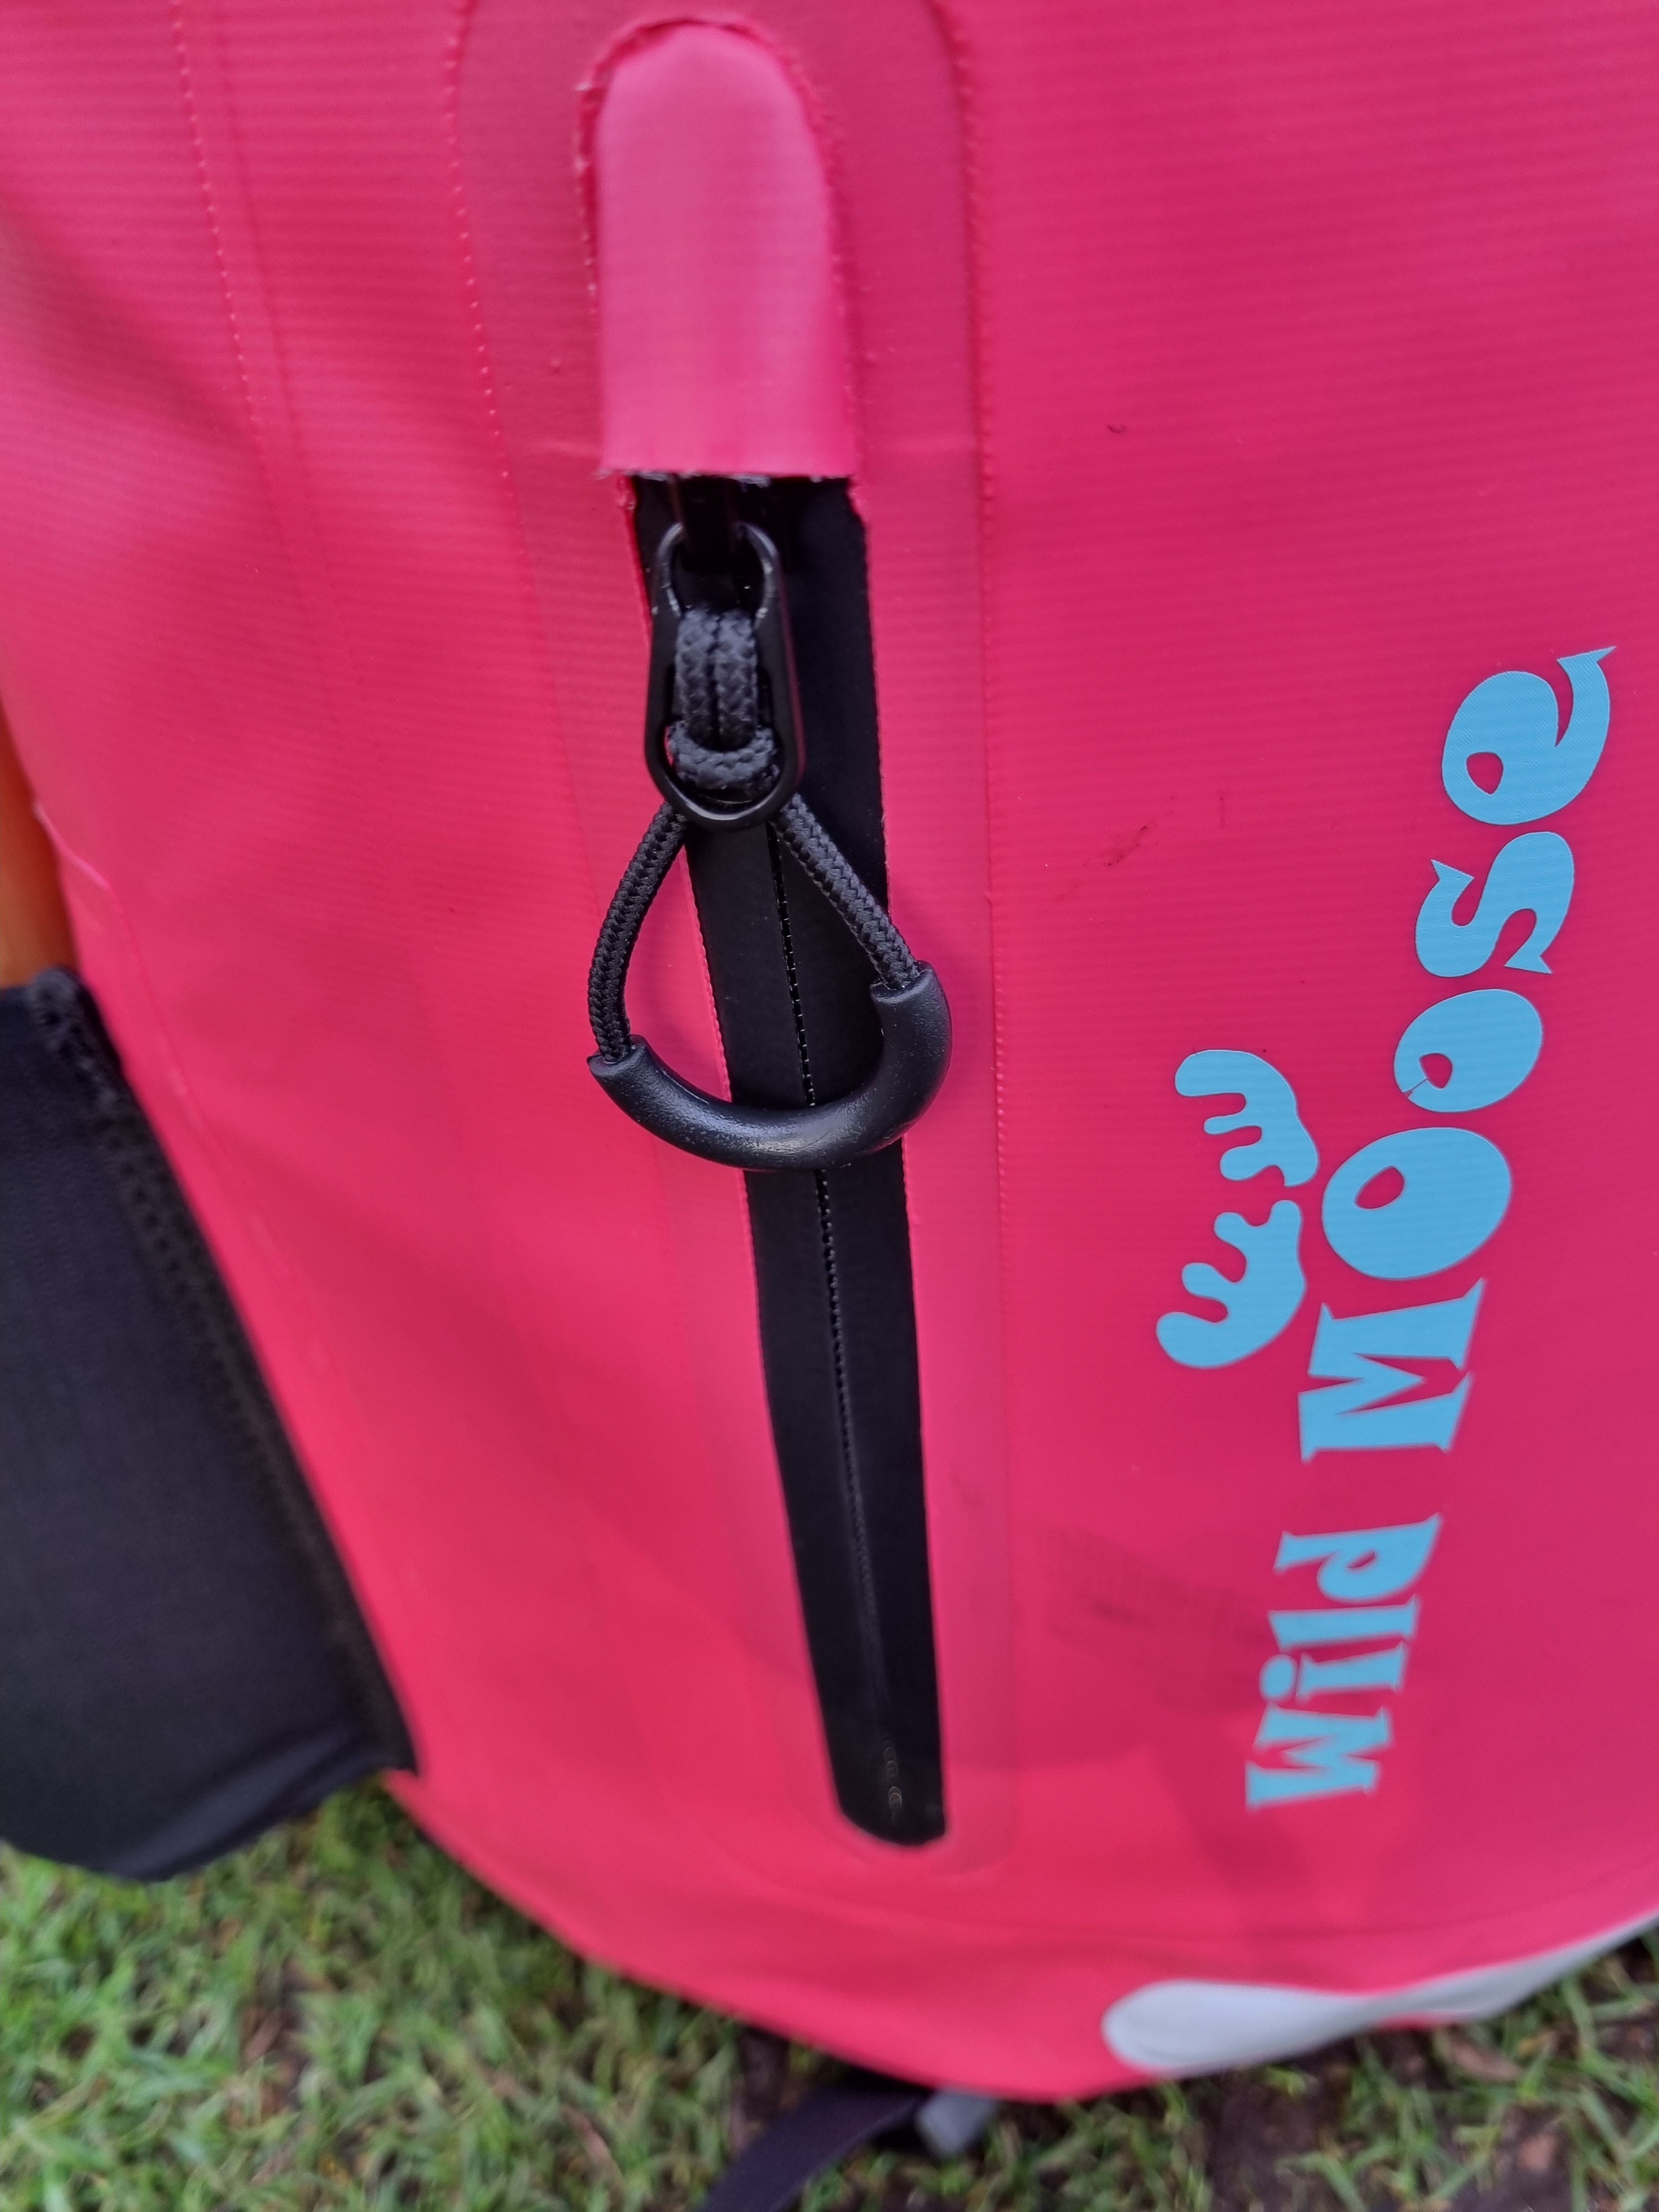 Caribou waterproof backpack     45L - hot pink